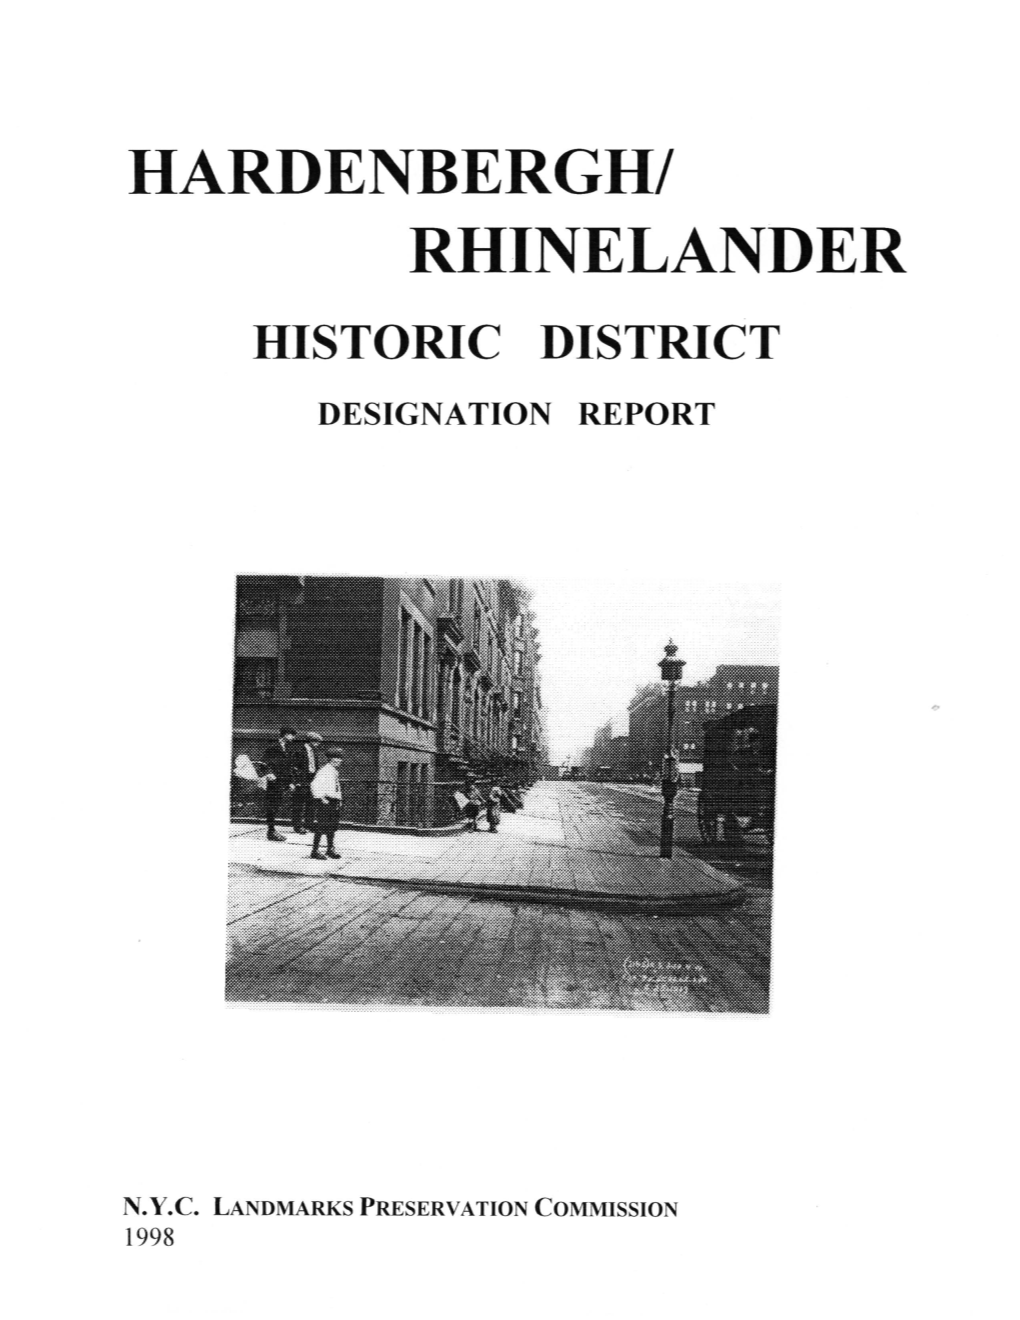 Hardenbergh/Rhinelander Historic District (Item No